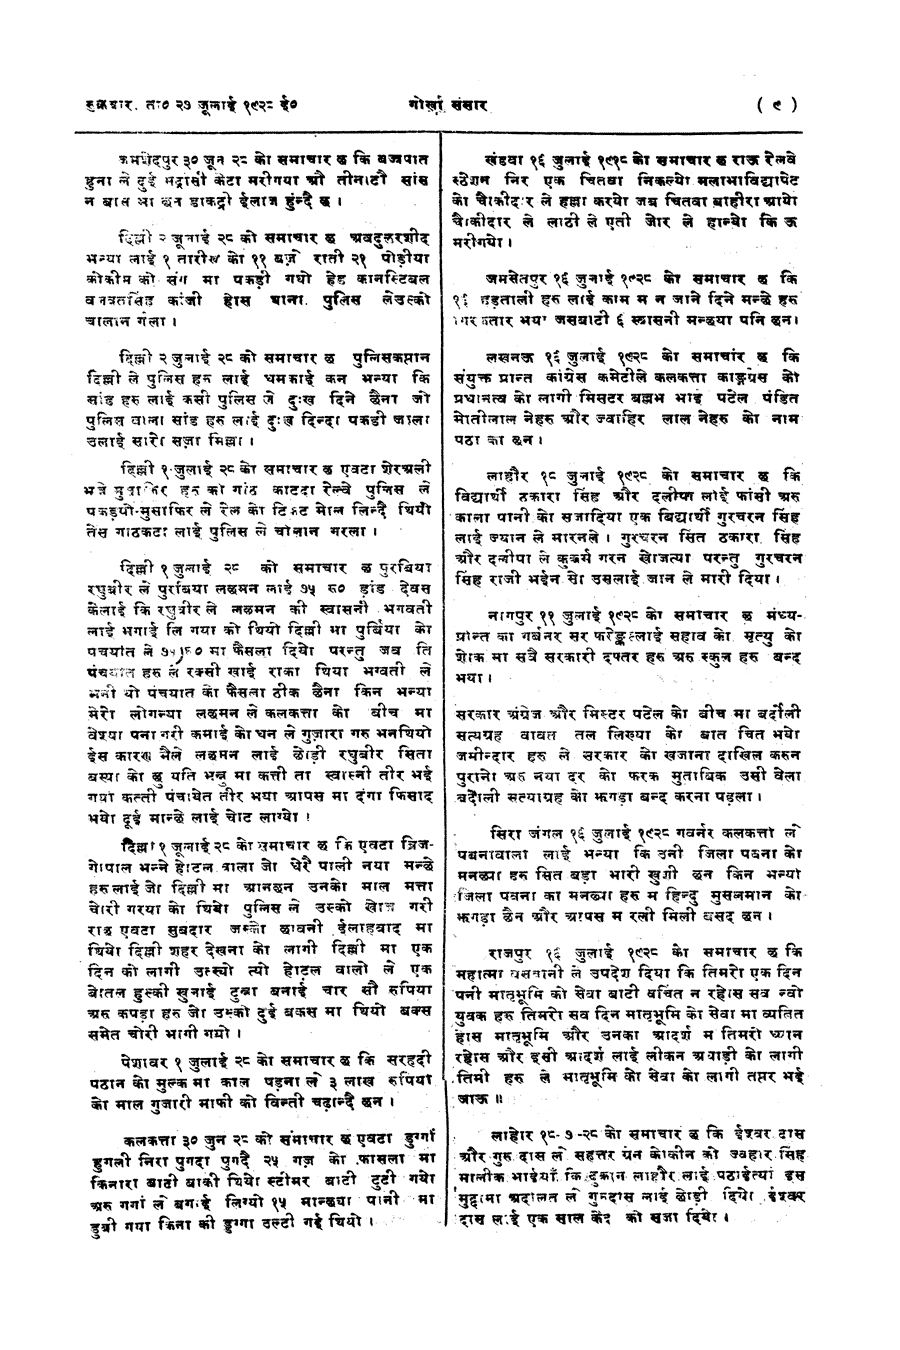 Gorkha Sansar, 27 July 1928, page 9